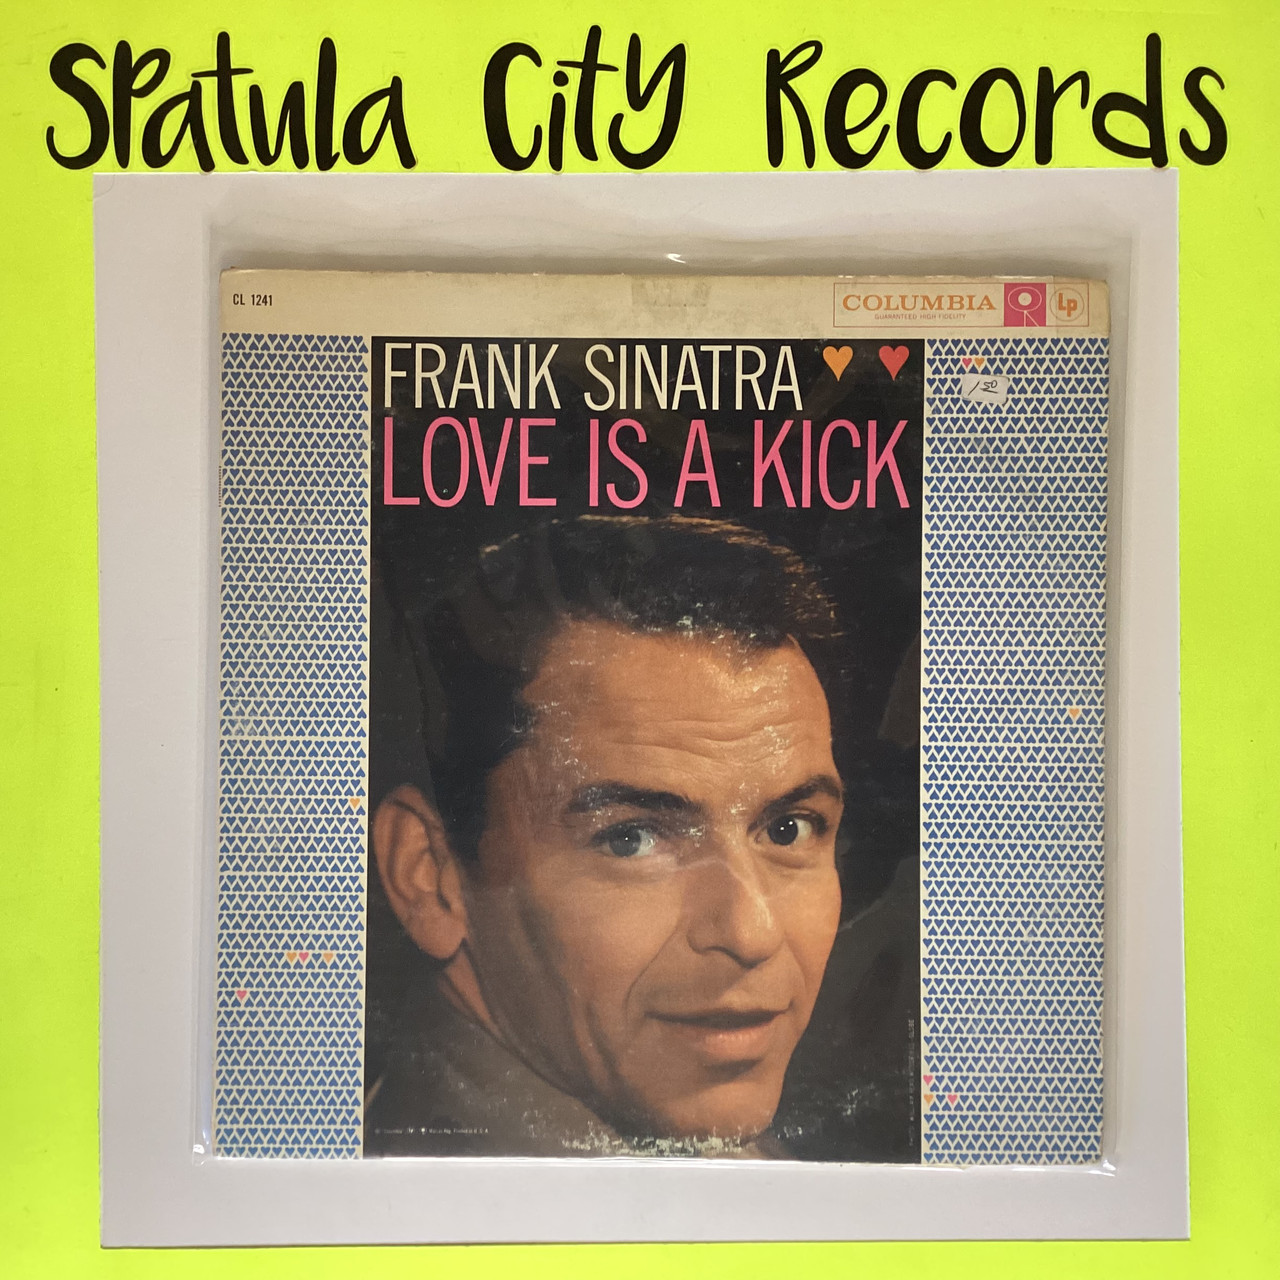 Frank Sinatra - Love is a Kick - MONO - vinyl record album  LP